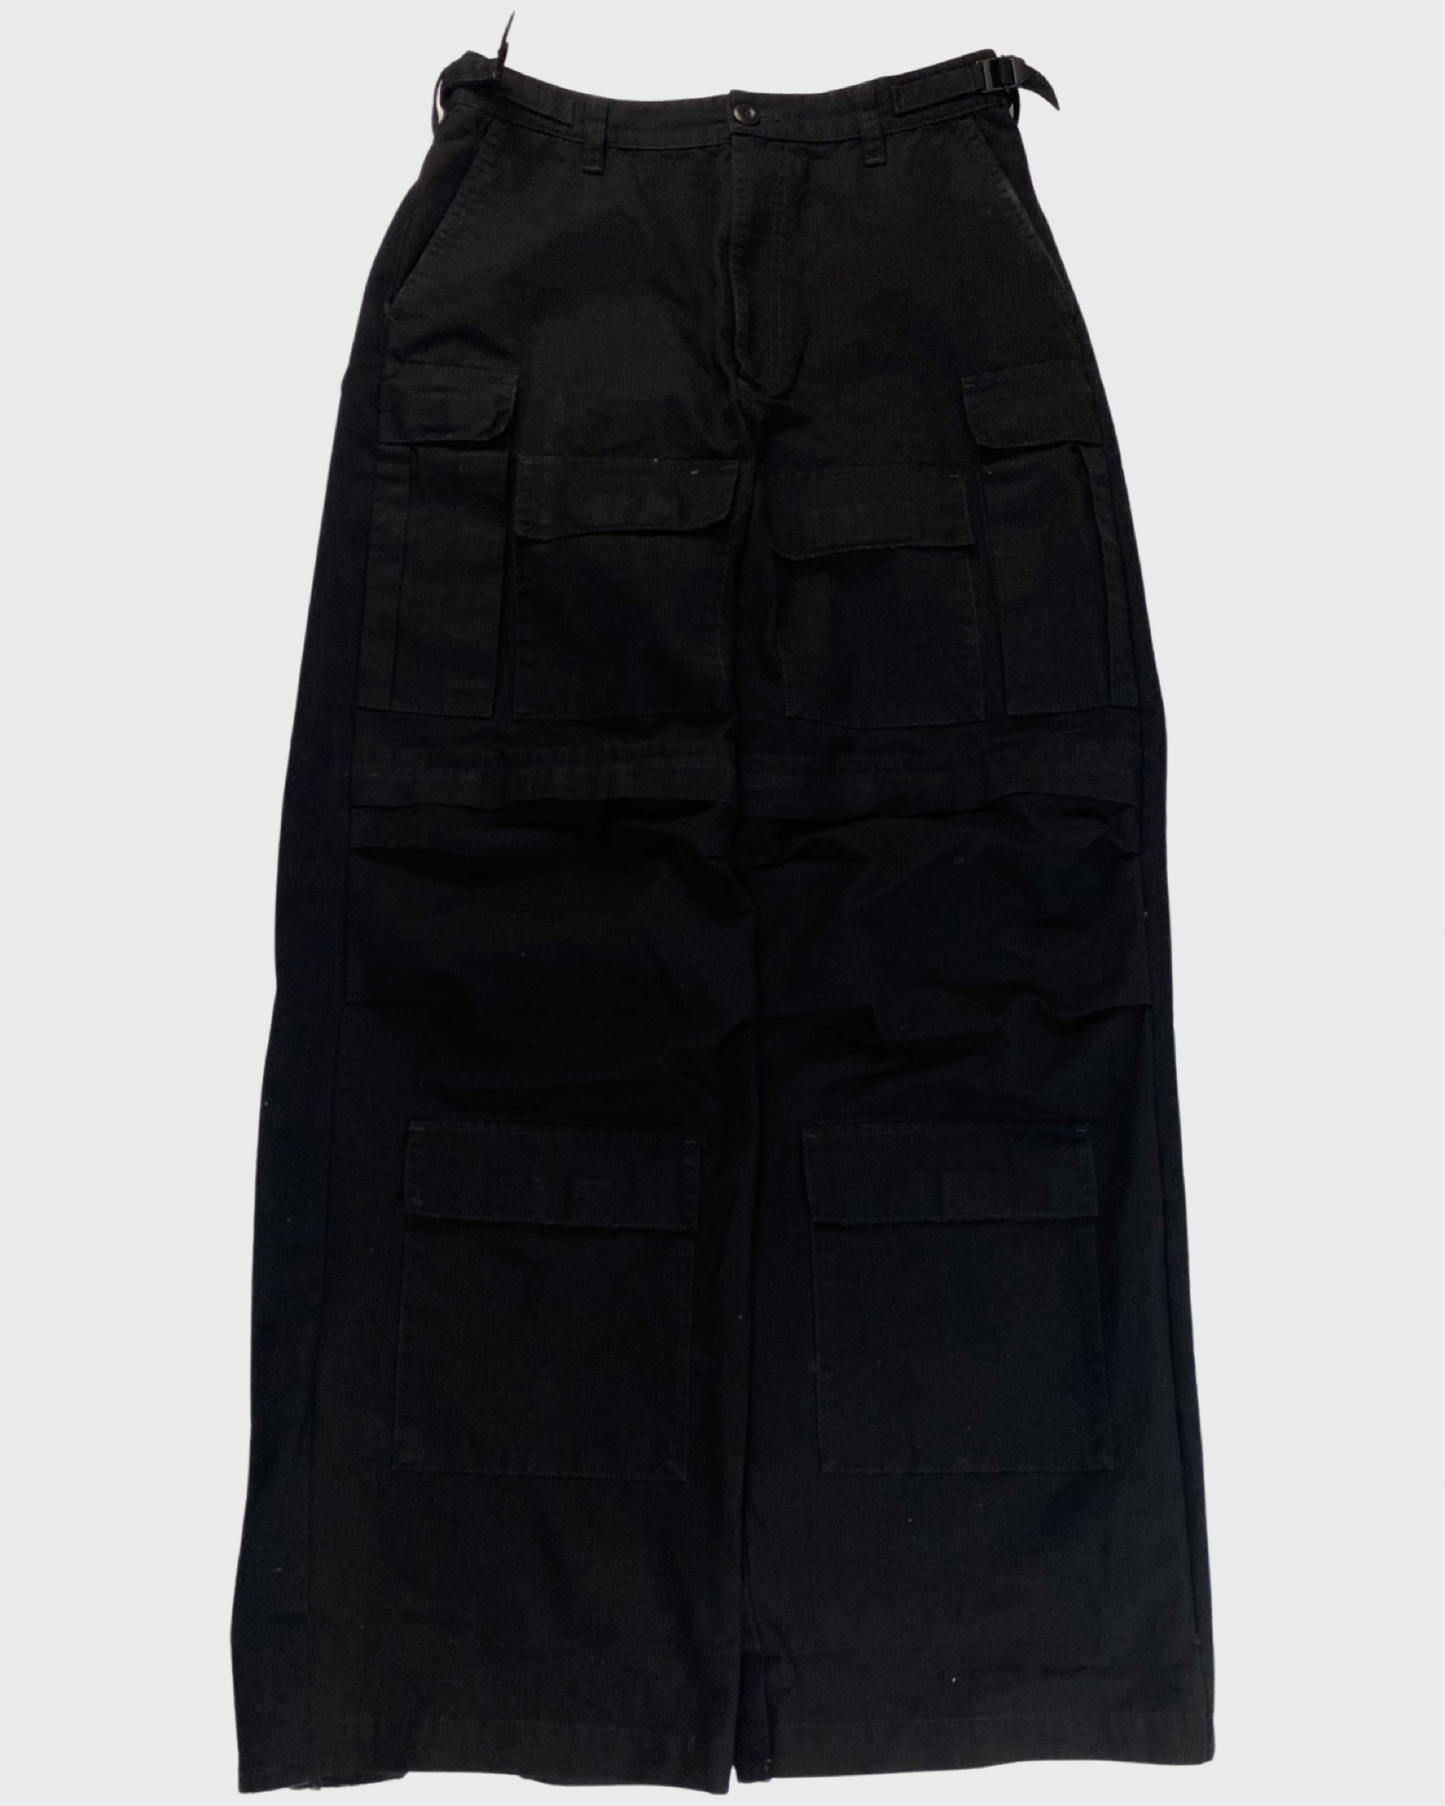 Balenciaga cargo x jeans hybrid pants in black SZ:S